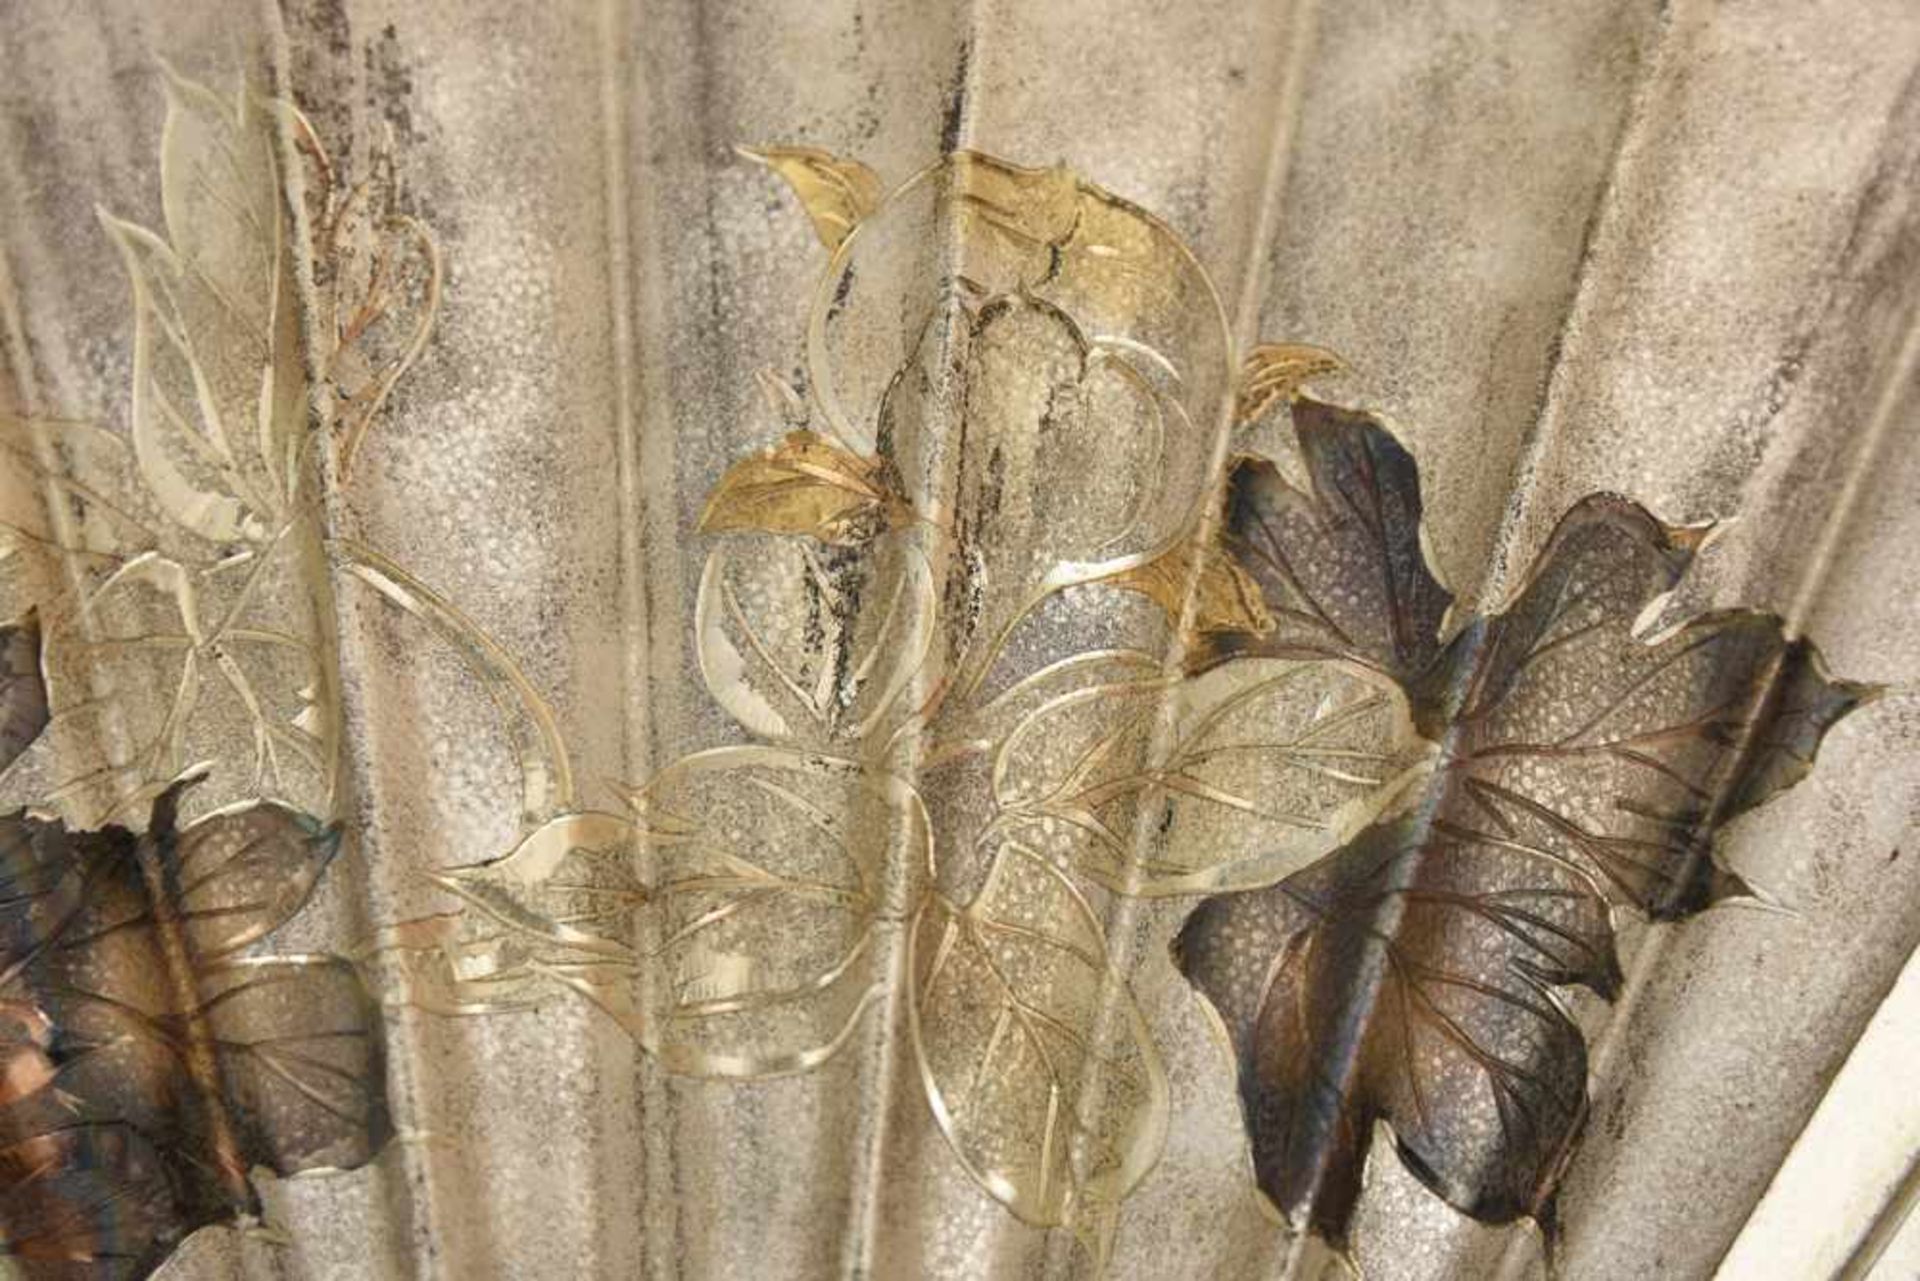 SILBERFÄCHER, Silber ca. 215 gramm, Japan, 20. Jh.Silberfächer mit Blumen verziert, rückseitig - Image 2 of 5